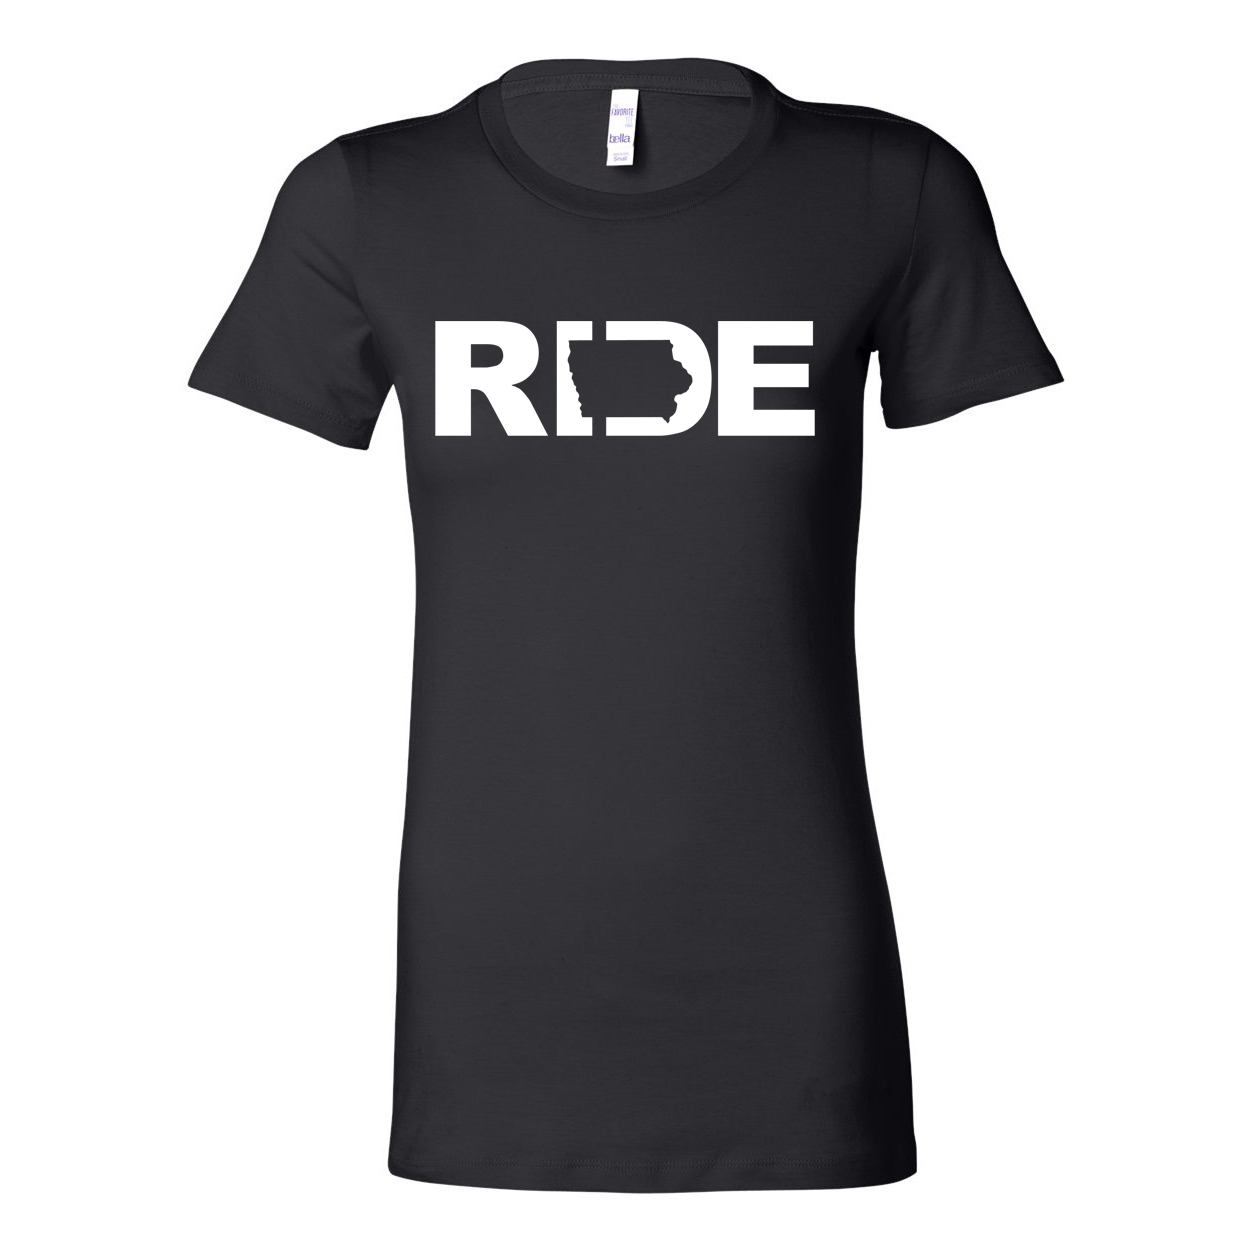 Ride Iowa Classic Women's Fitted Tri-Blend T-Shirt Black (White Logo)